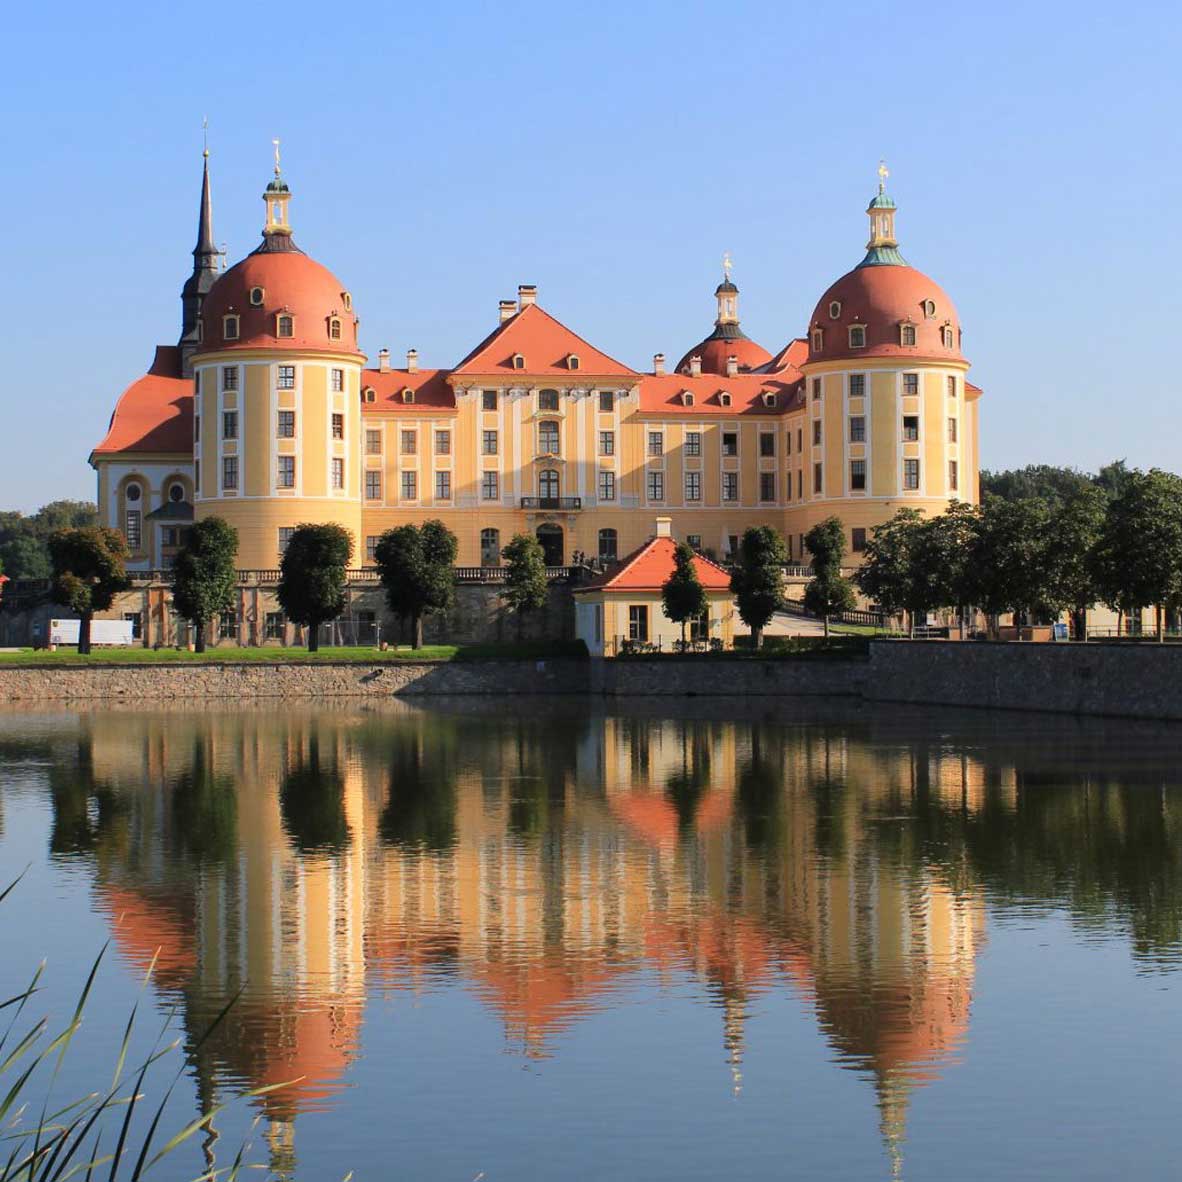 Tour 02 - Schlosspark Moritzburg